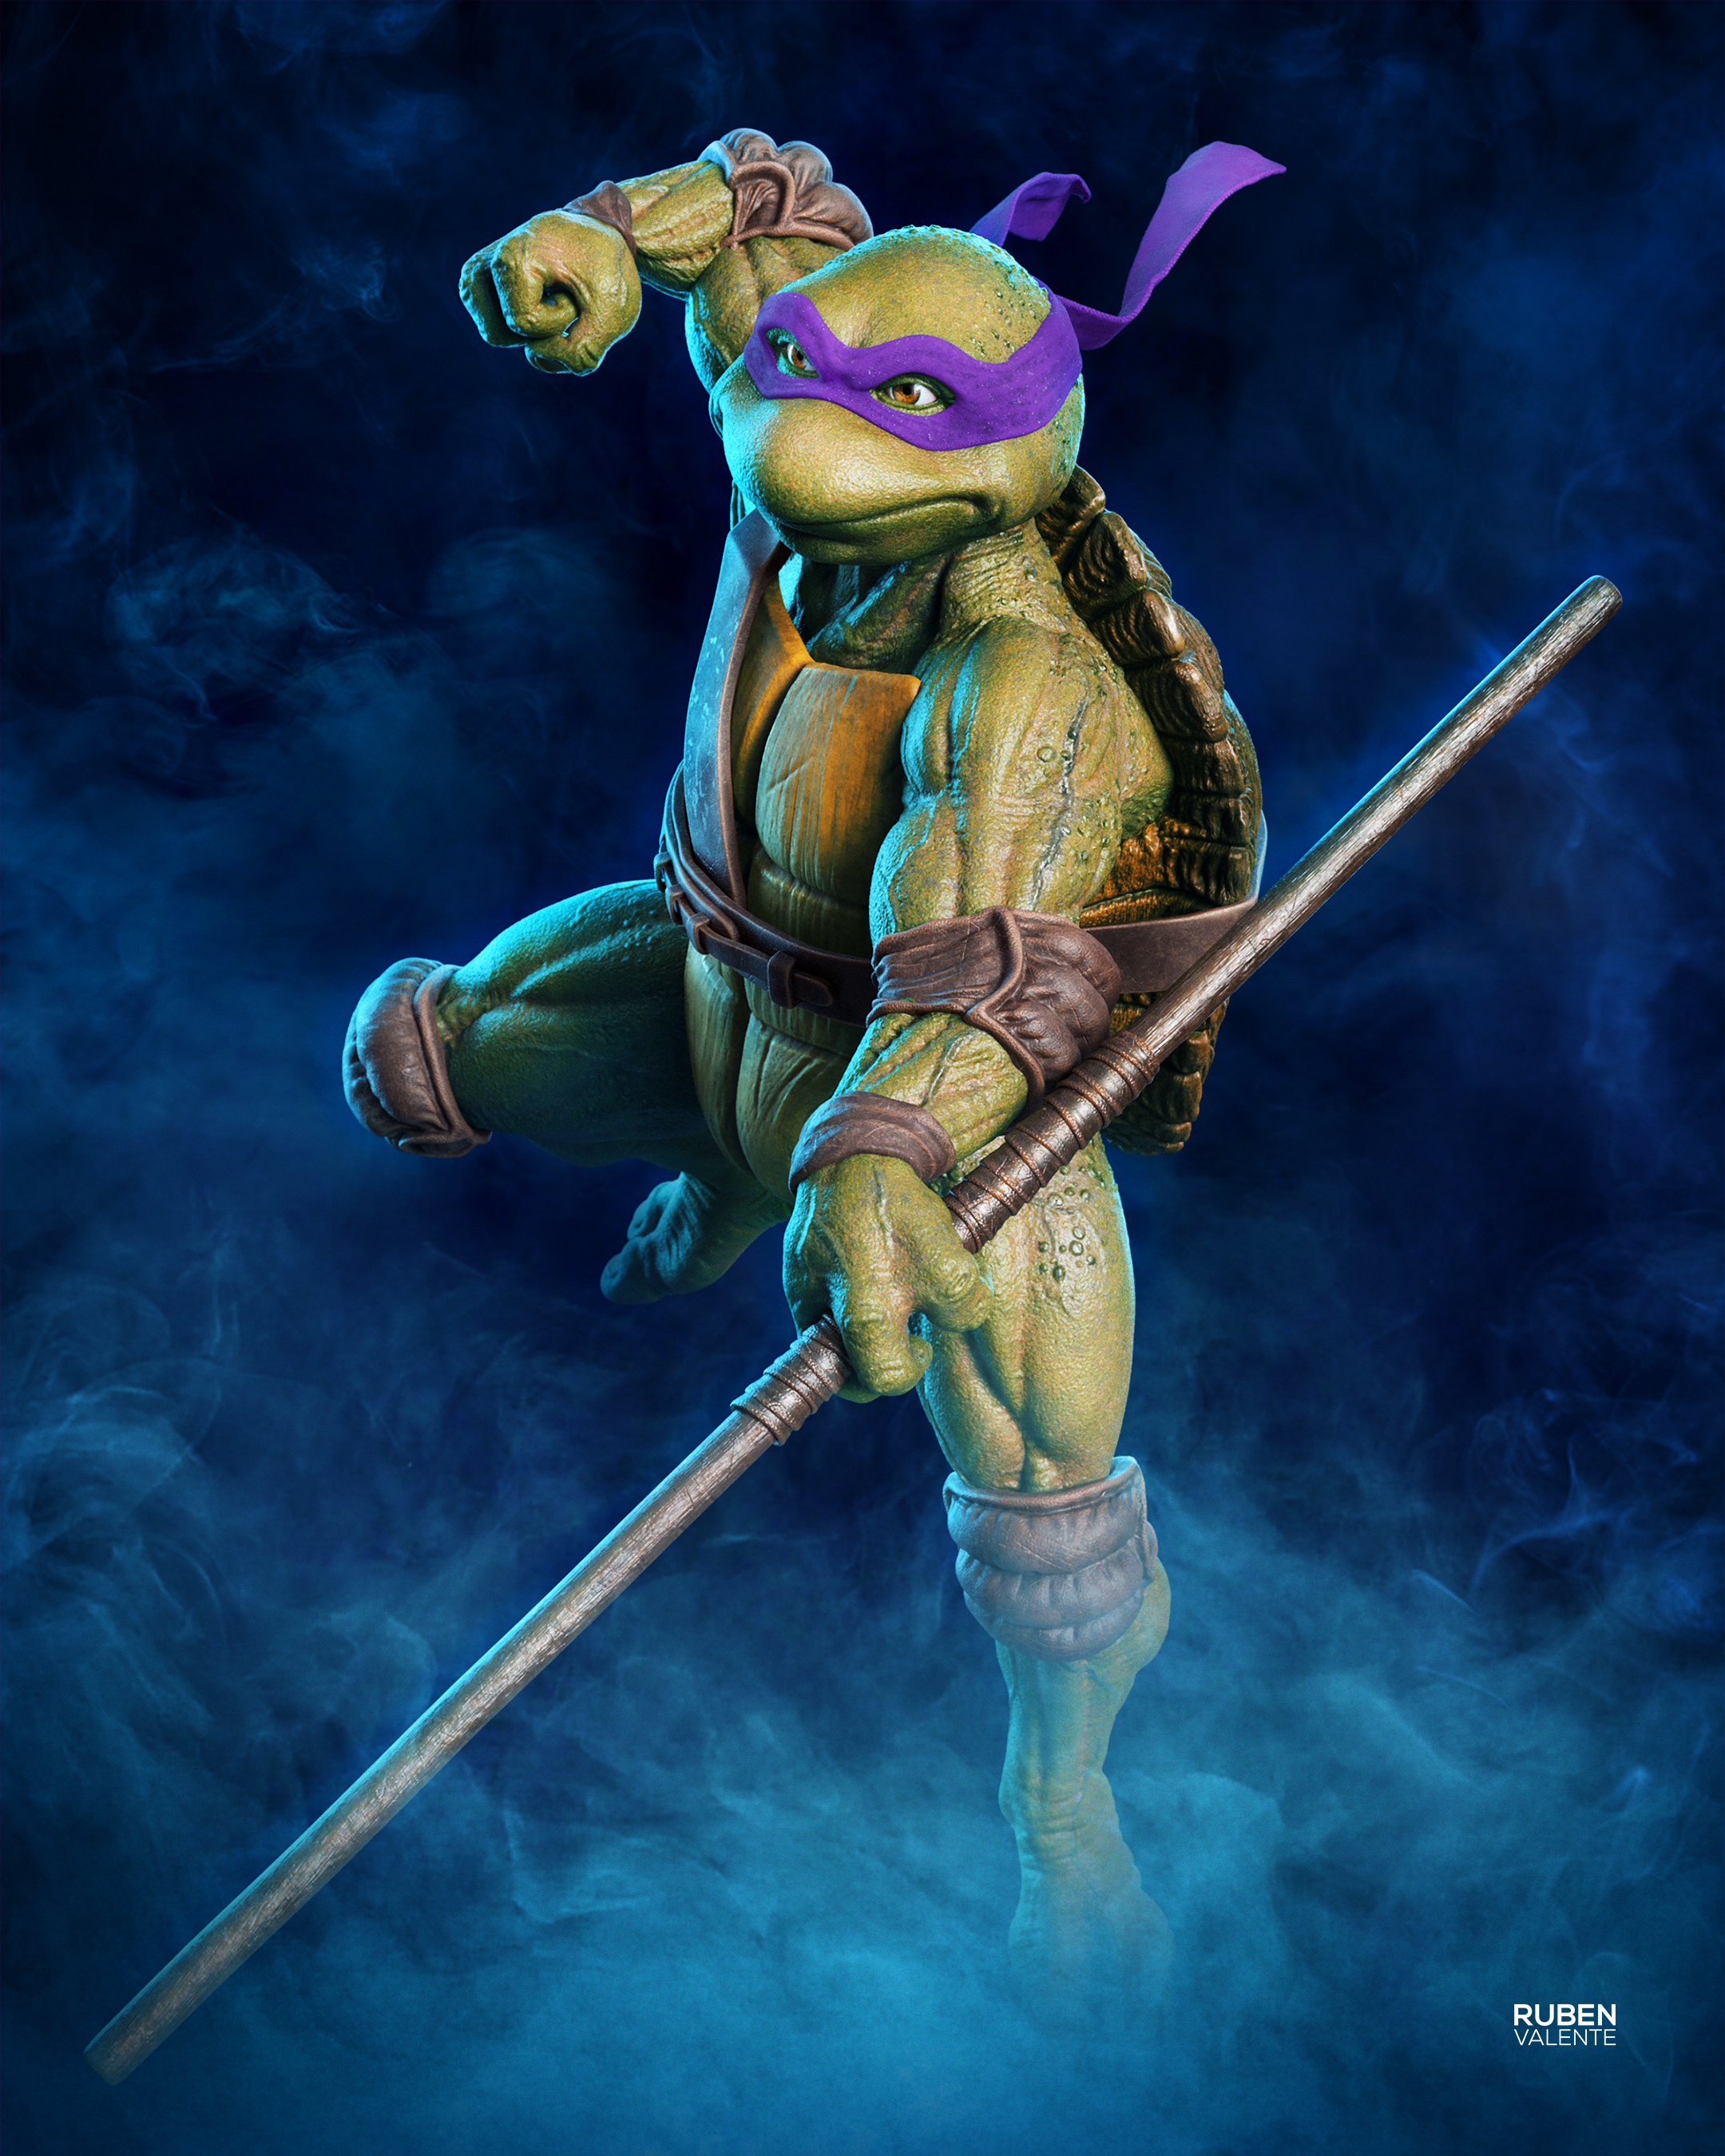 TMNT Donatello - 30TH movie anniversary.